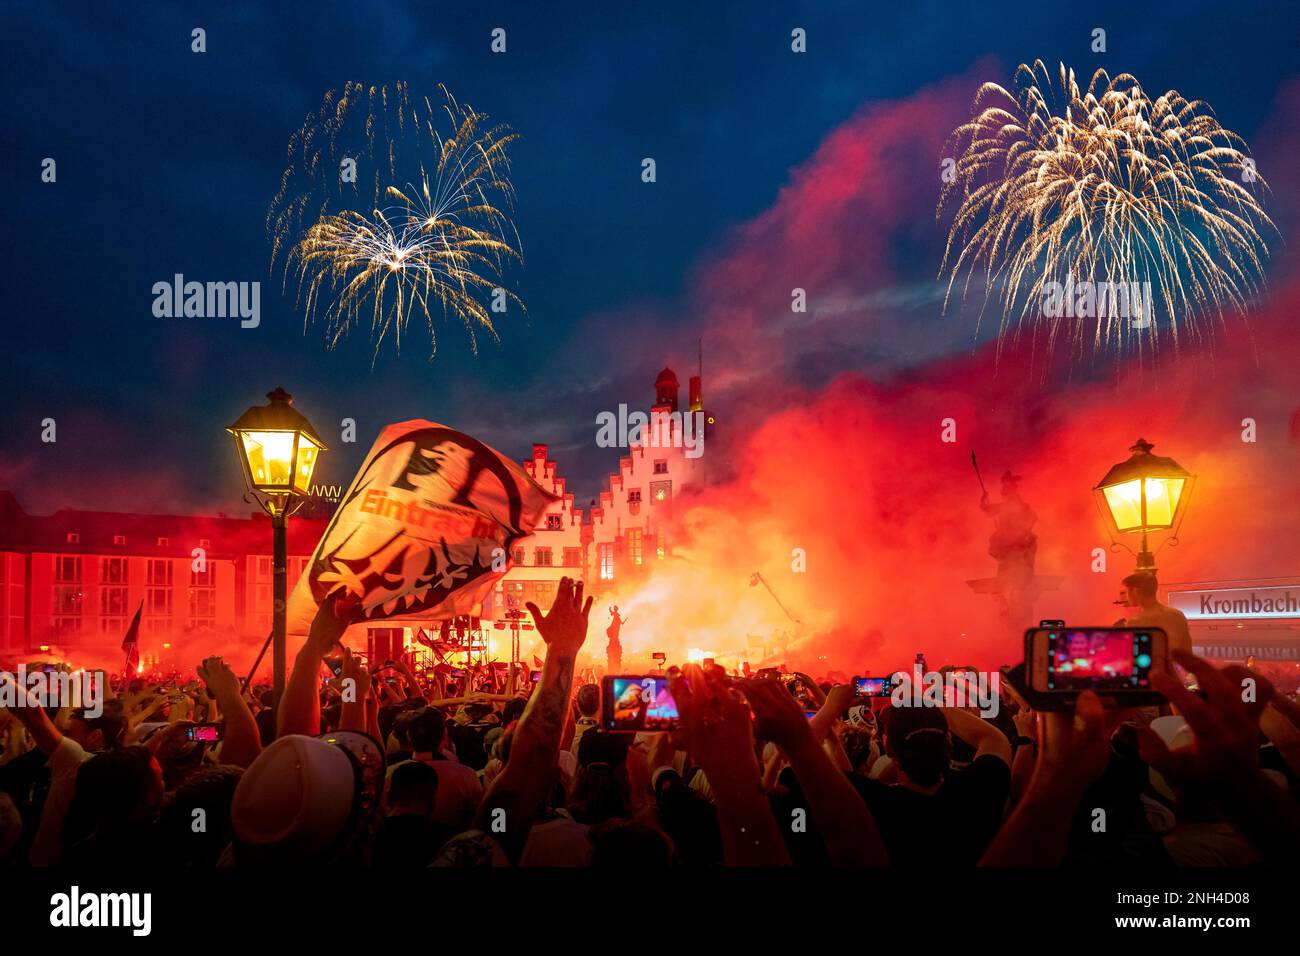 Roemer, Eintracht Frankfurt europacup, vincitore della UEFA Europa League, festa al tramonto a Francoforte sul meno, Germania Foto Stock